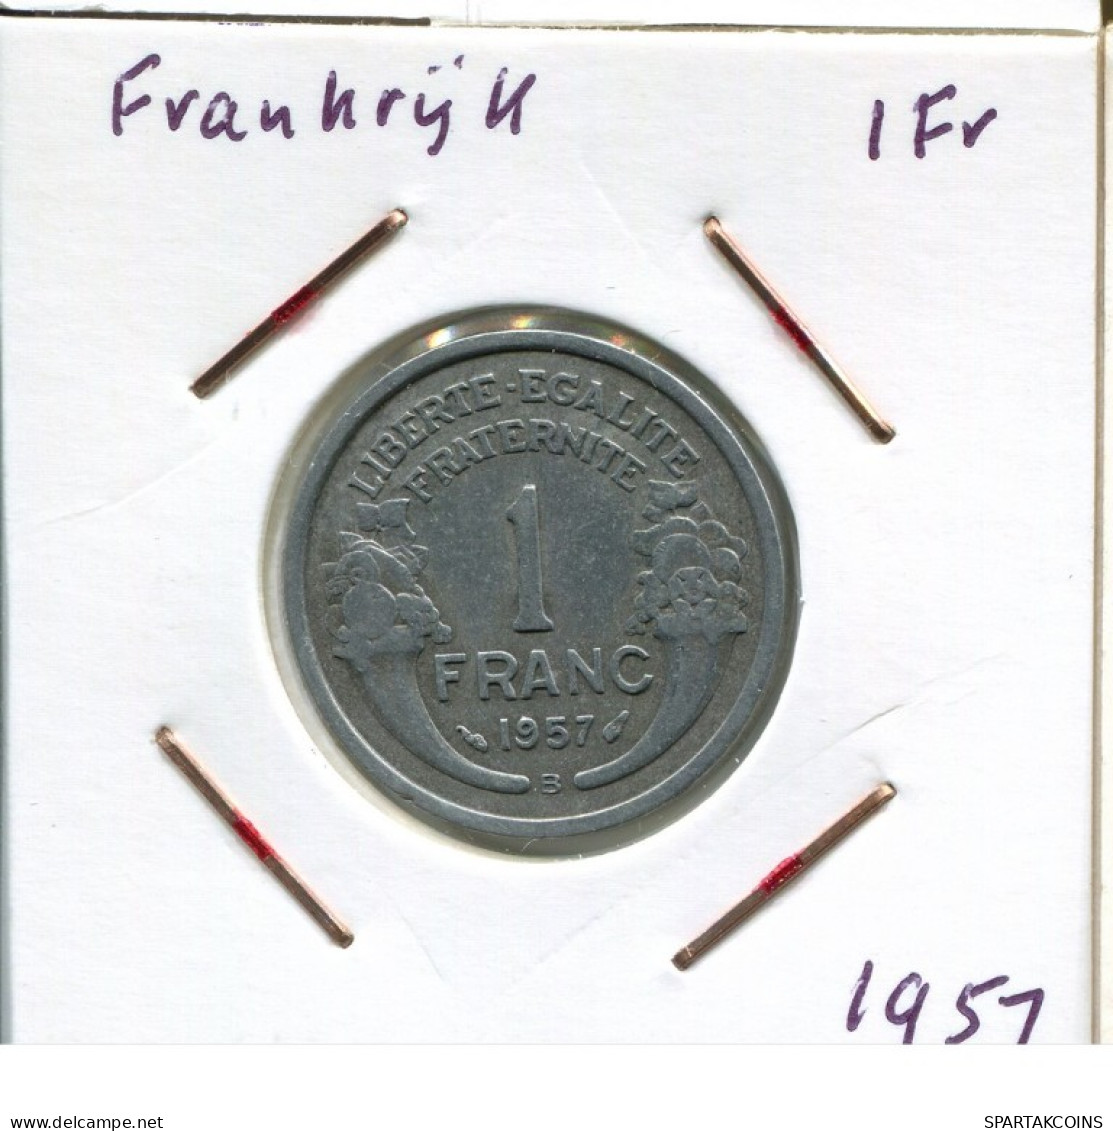 1 FRANC 1957 B FRANCE Coin French Coin #AM555.U.A - 1 Franc